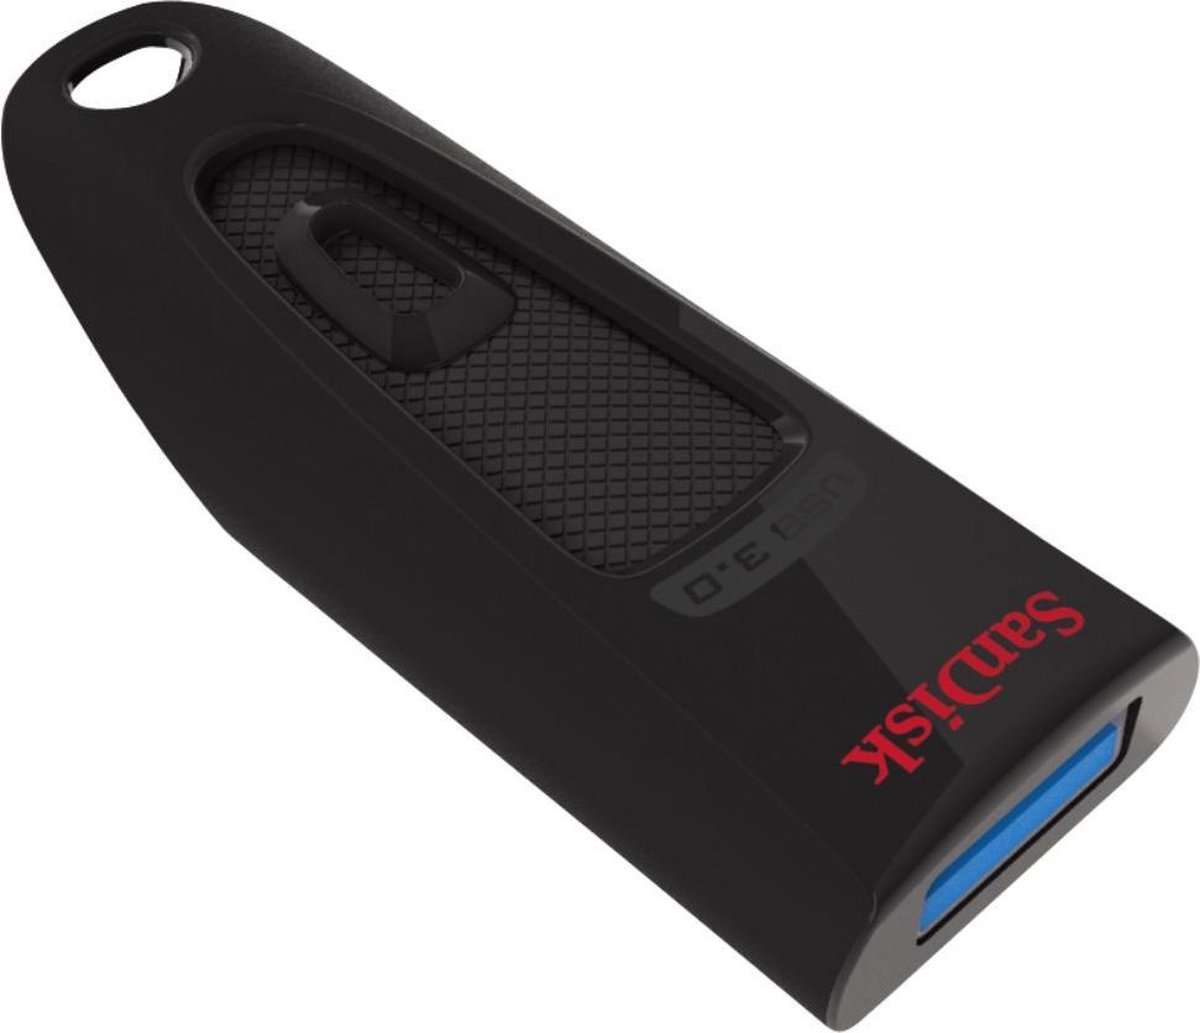 Sandisk Cruzer Ultra | 256GB | USB 3.0 - USB Stick - SanDisk